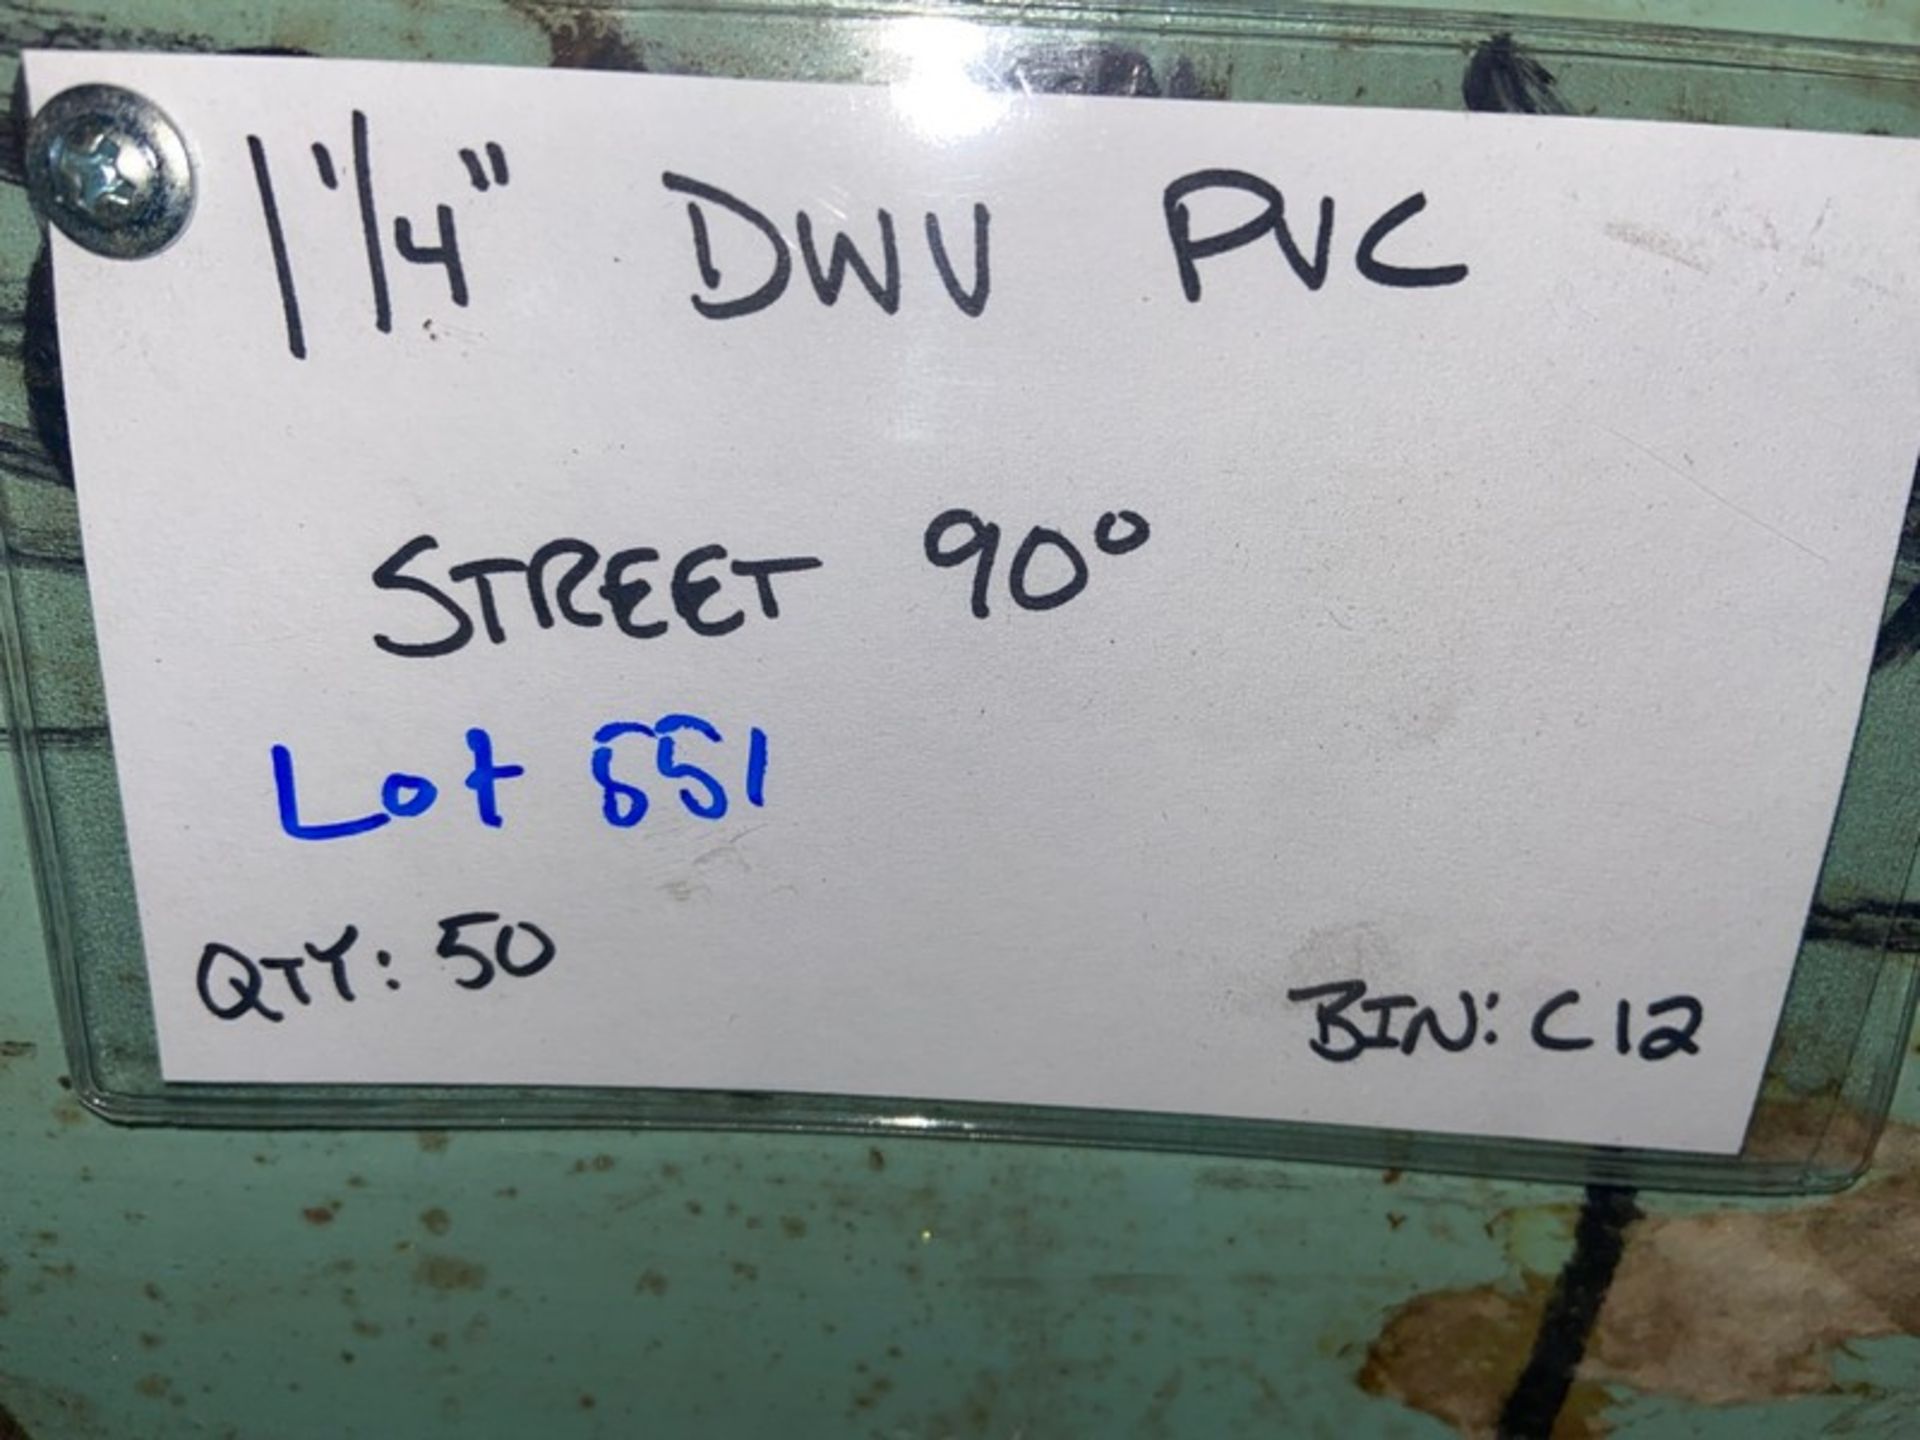 (50) 1 1/4” DWV PVC STREET 90’ (Bin:C12)(LOCATED IN MONROEVILLE, PA) - Image 4 of 4